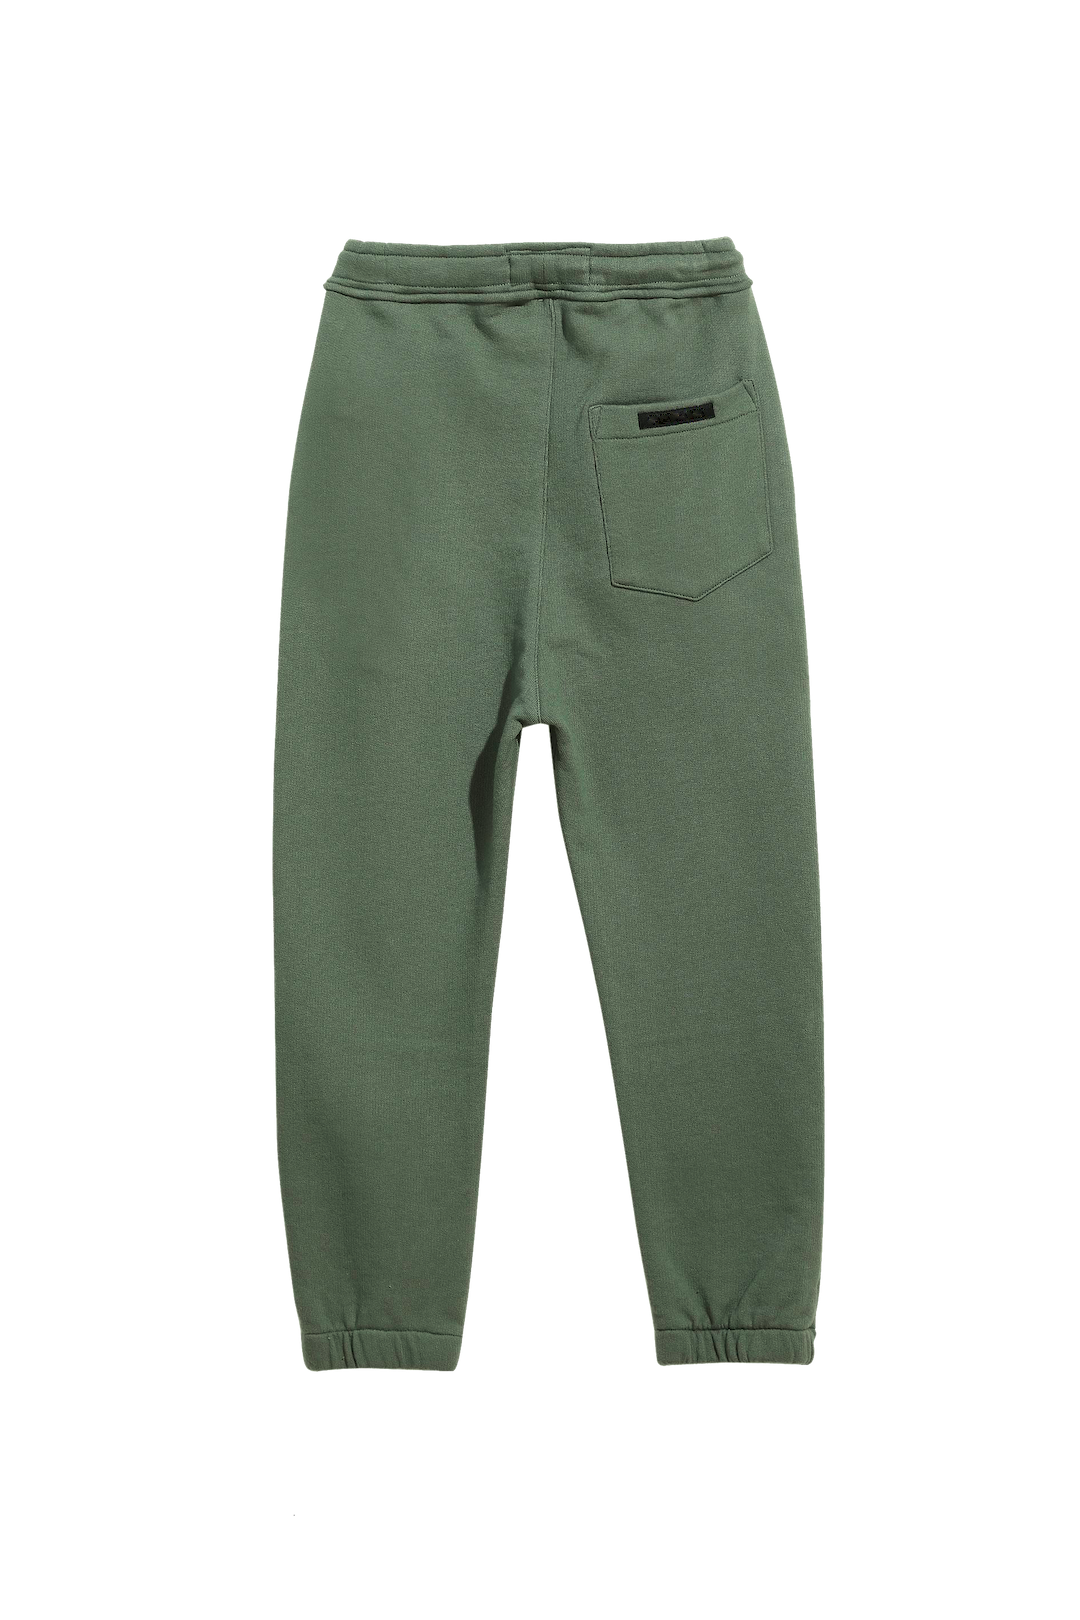 CAMP Green Khaki - Jogger Pants